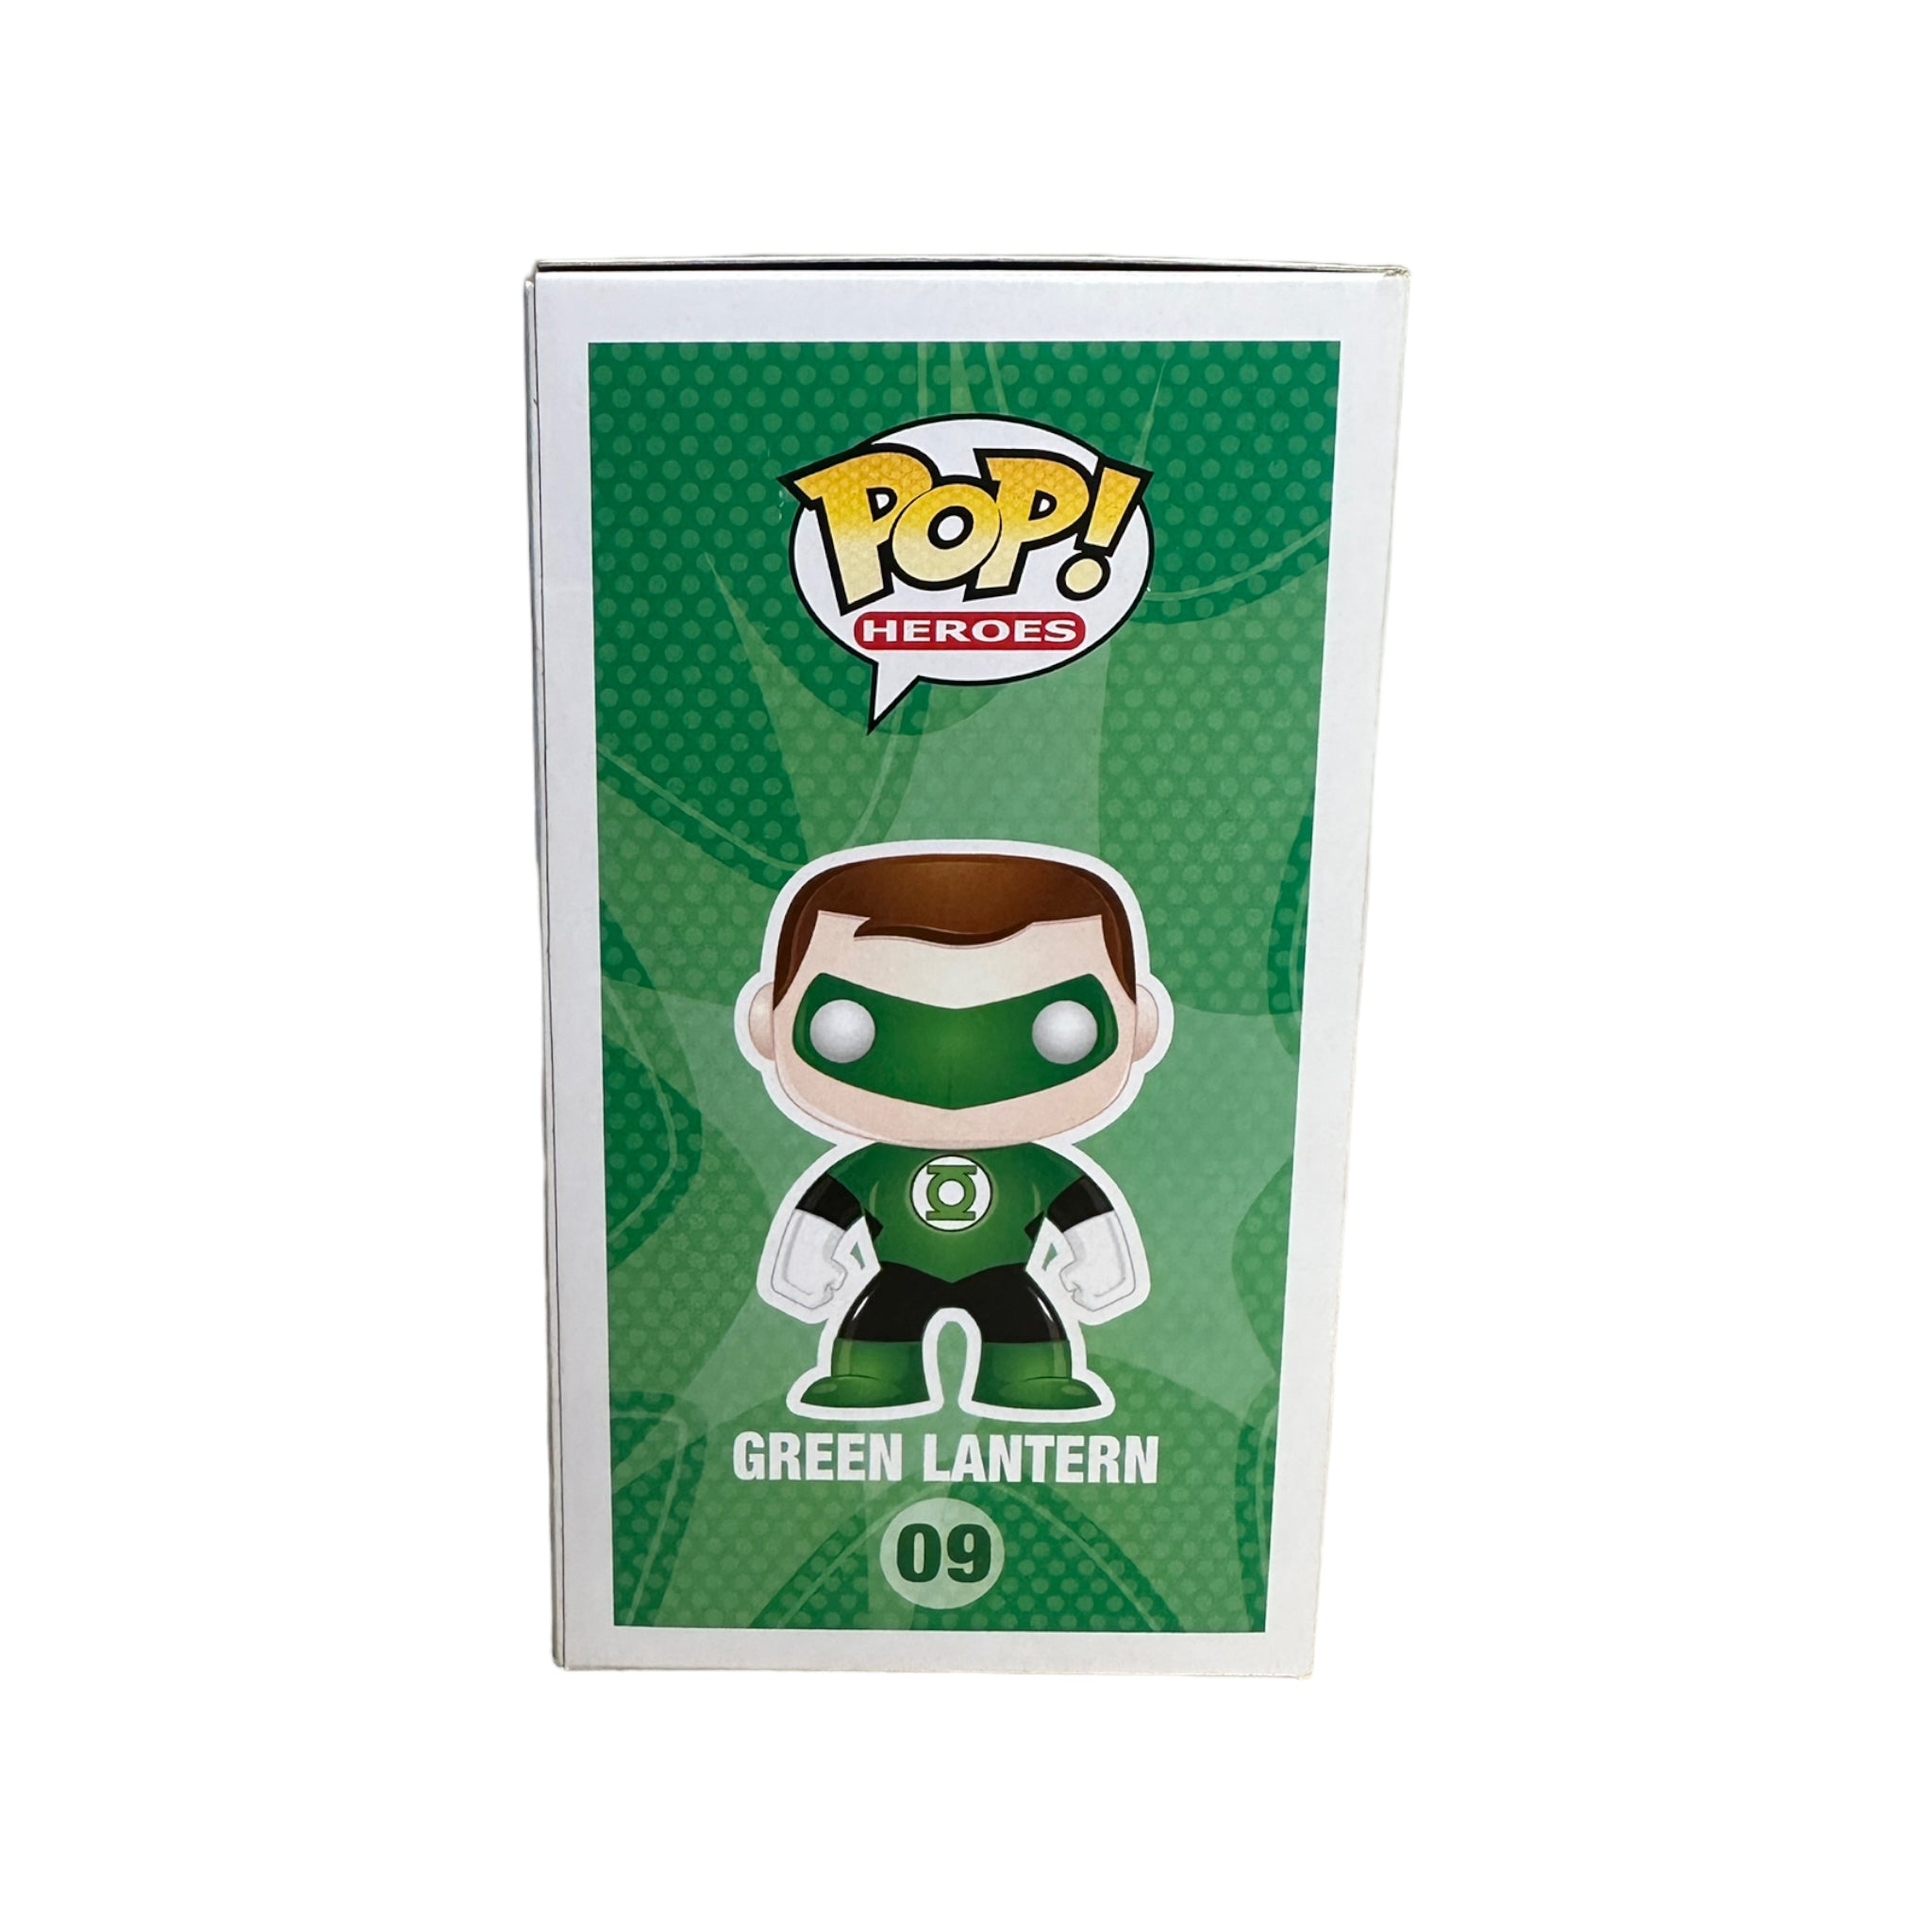 Green Lantern #09 (Metallic Chase) Funko Pop! - DC Universe - 2013 Pop! - Condition 7.5/10